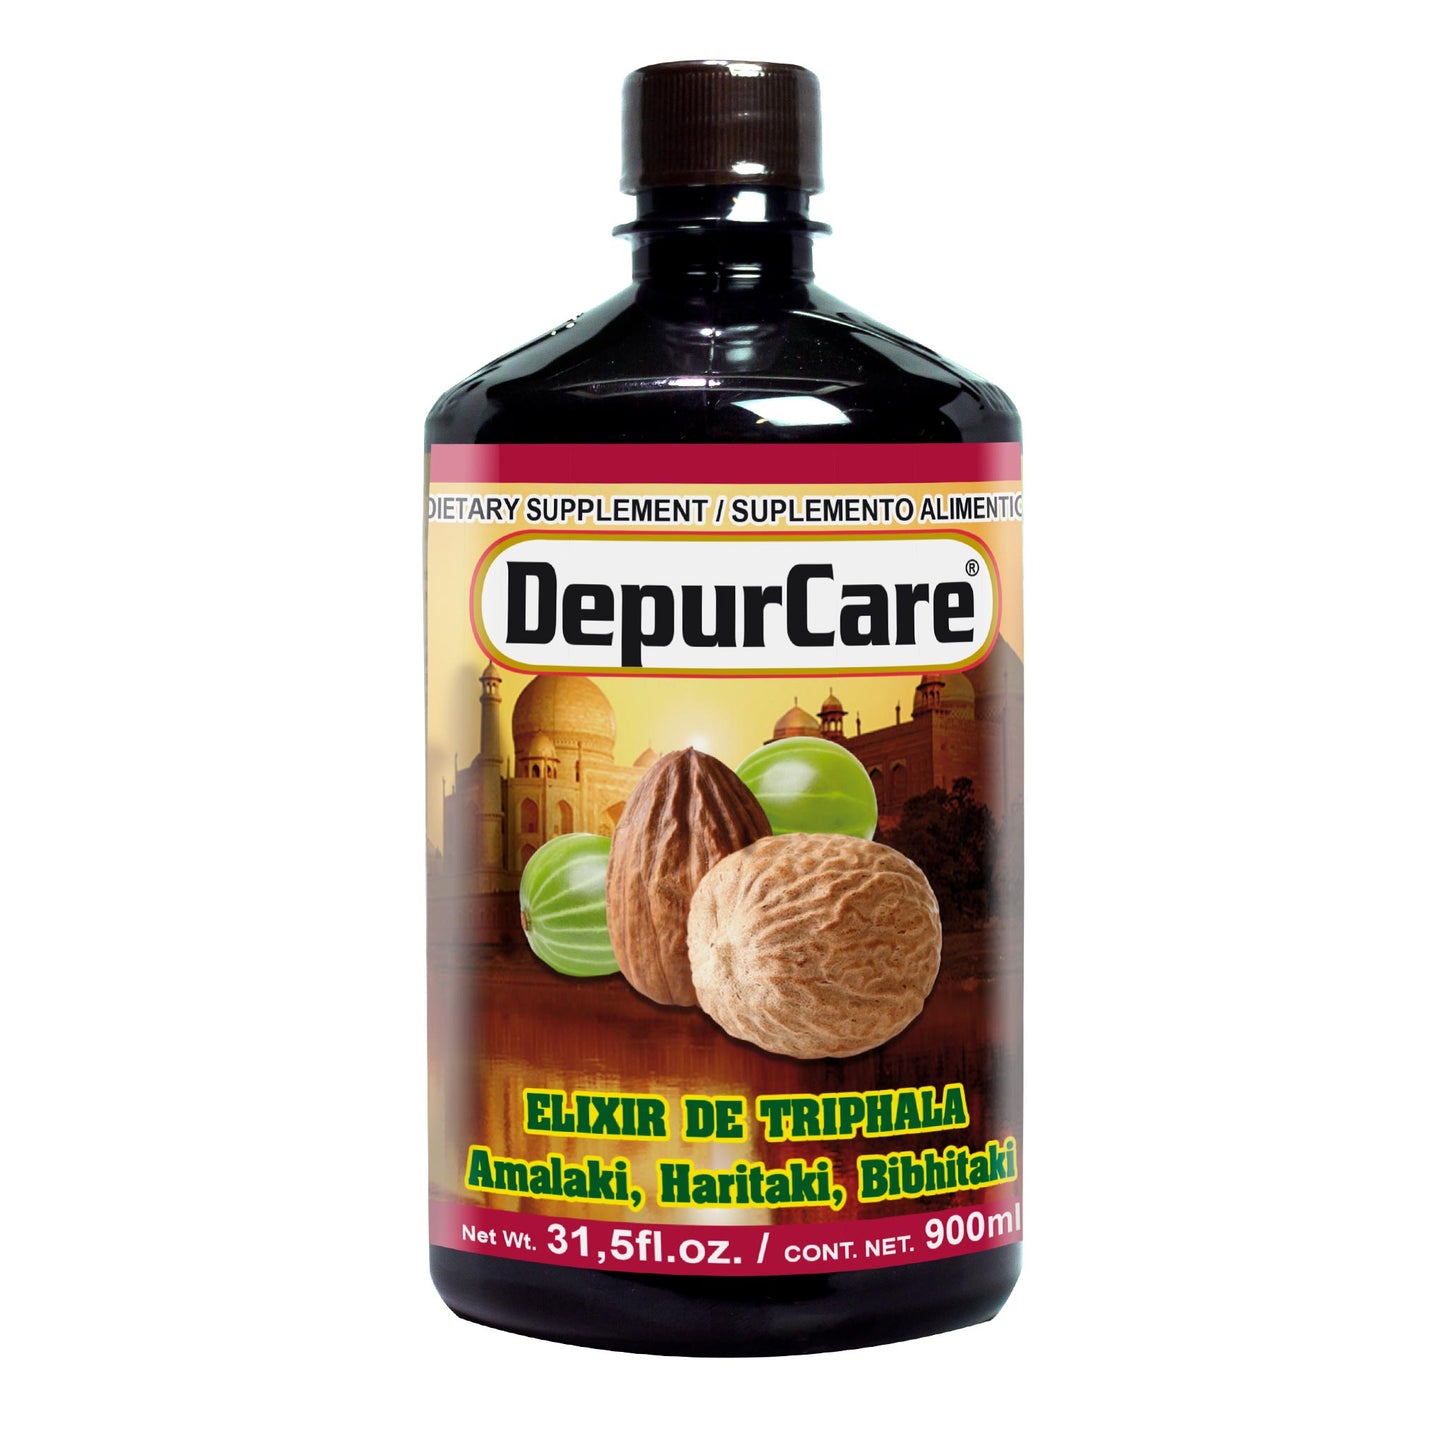 DEPURCARE ® elixir botella de 900ml